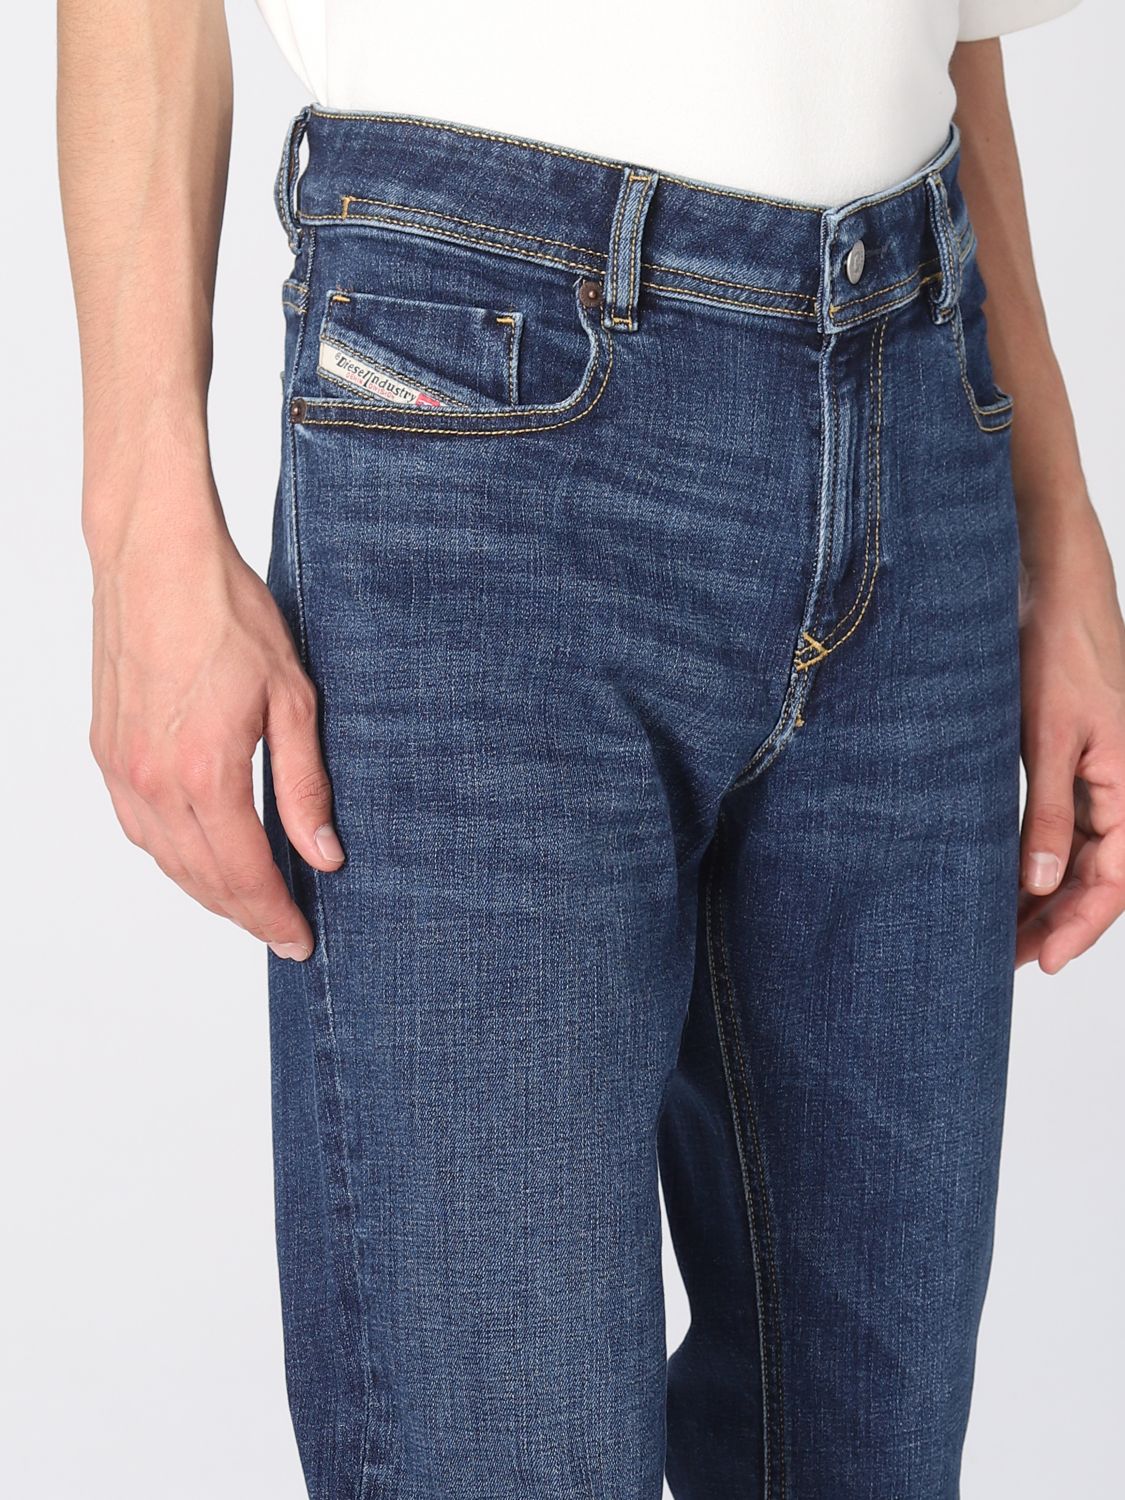 Passief schuld maak je geïrriteerd Diesel Outlet: jeans for man - Blue | Diesel jeans A0359409B98 online on  GIGLIO.COM